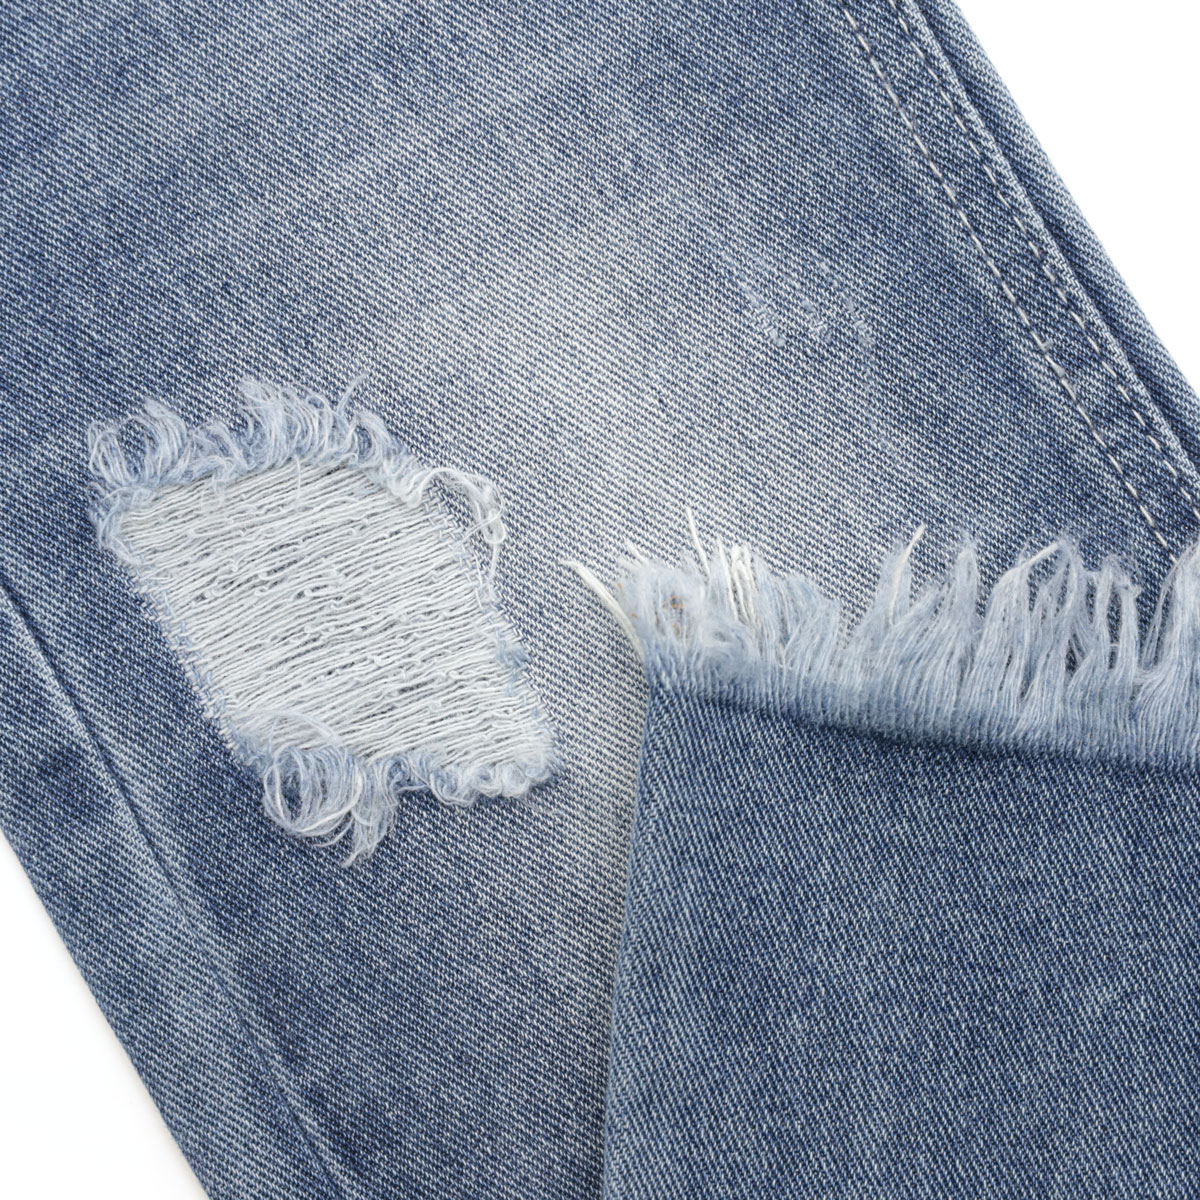 6 Cool Ways to Wear Non-Stretch Denim Fabric 2